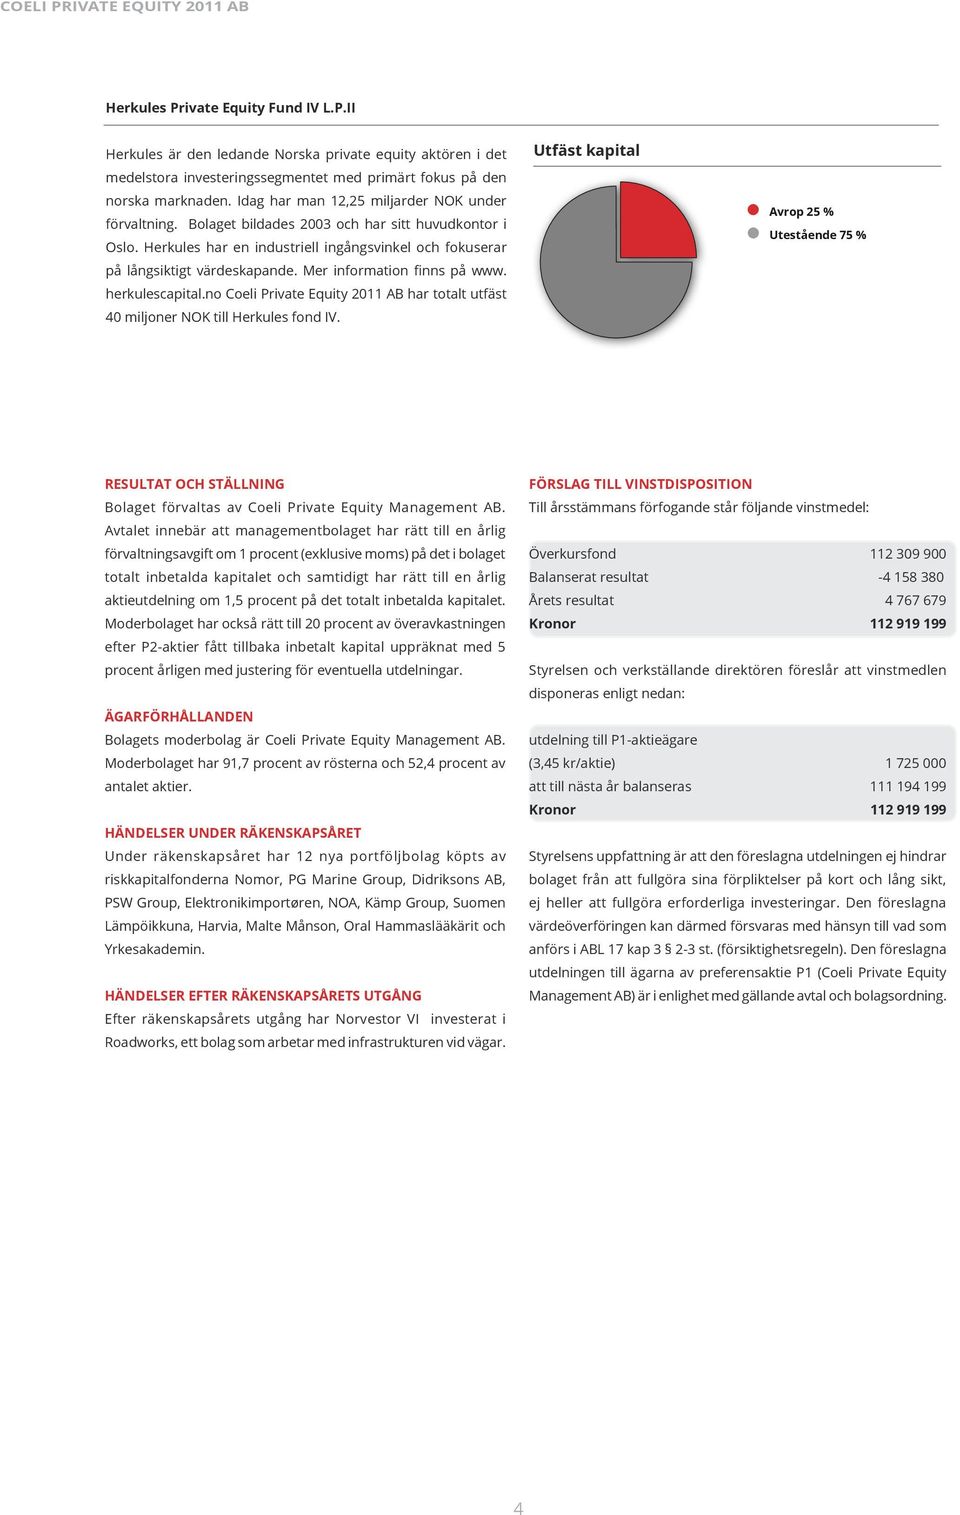 Mer information finns på www. herkulescapital.no Coeli Private Equity 2011 AB har totalt utfäst 40 miljoner NOK till Herkules fond IV.